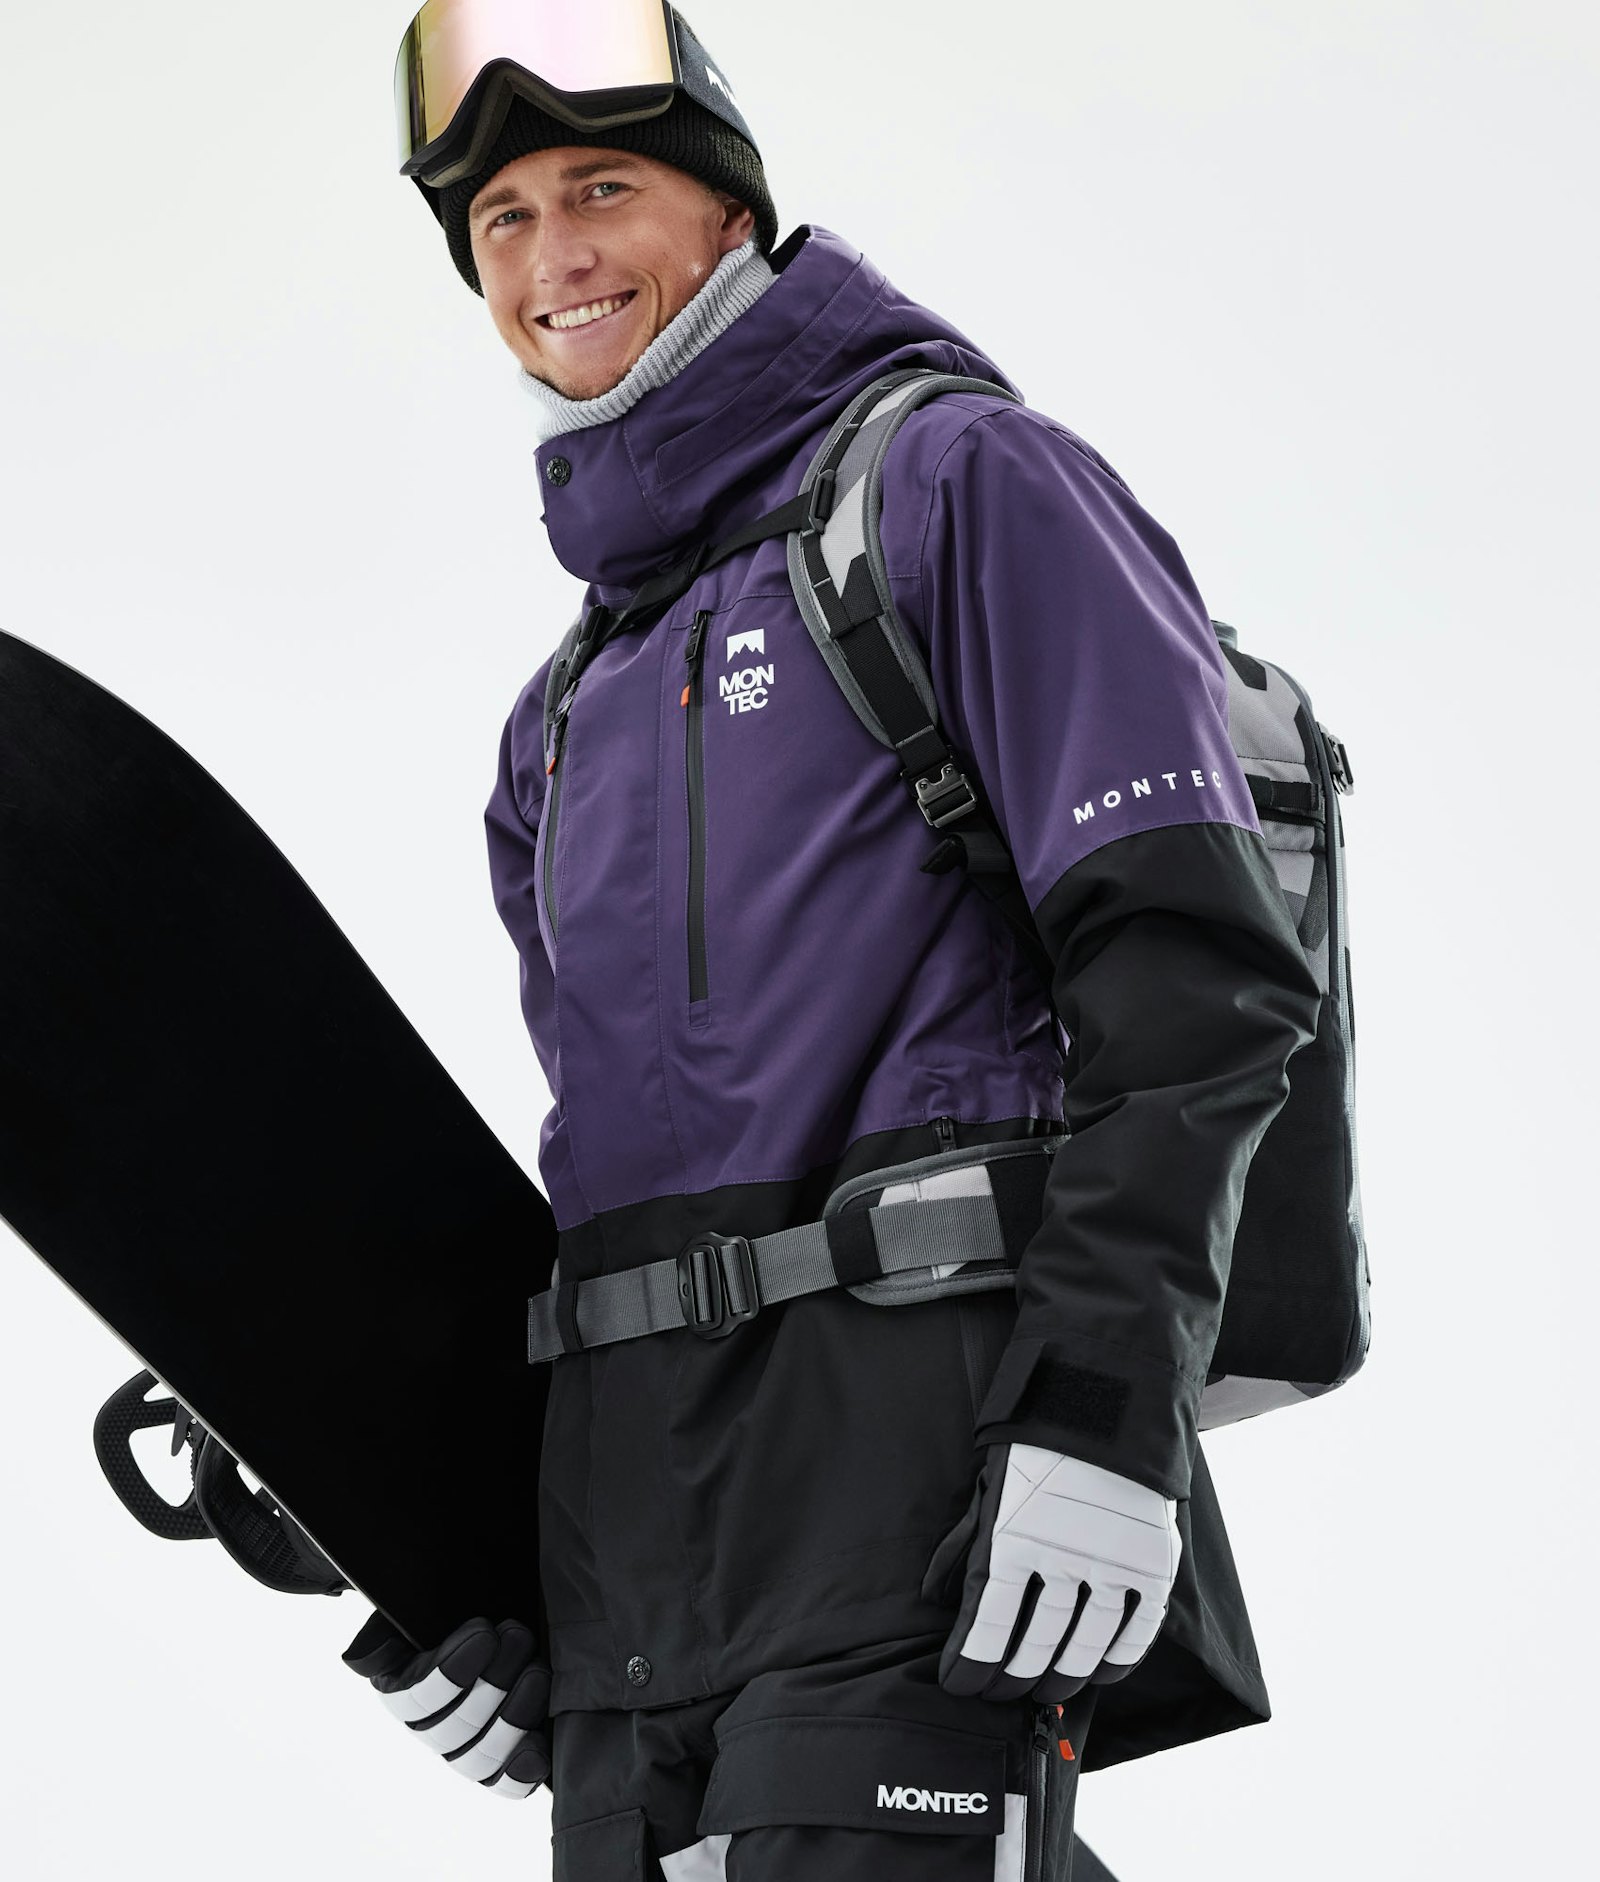 Fawk 2021 Snowboard jas Heren Purple/Black Renewed